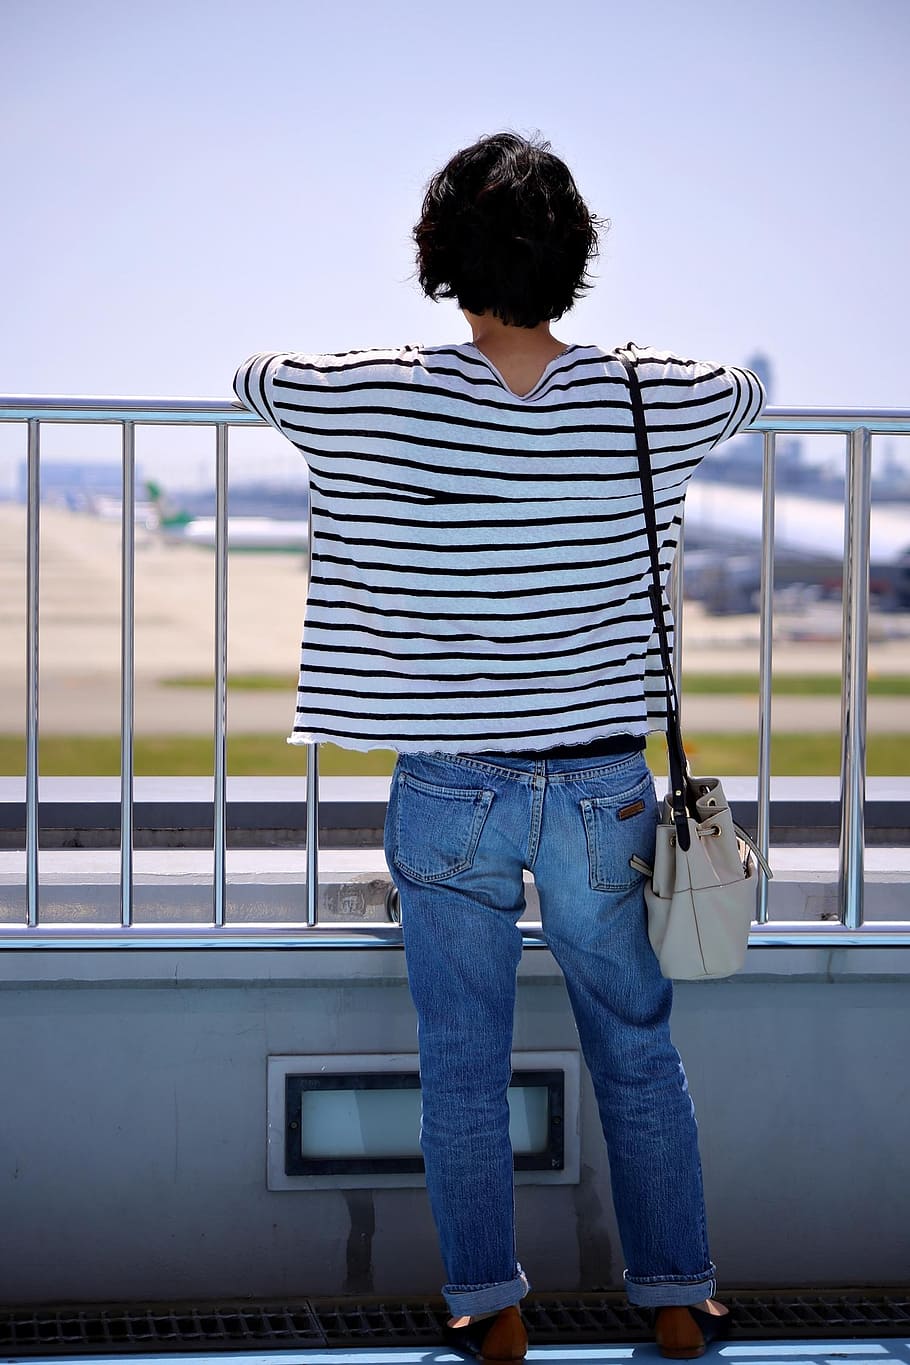 japanese, japan, osaka, kansai international airport, women, portrait, denim, jeans, one person, casual clothing